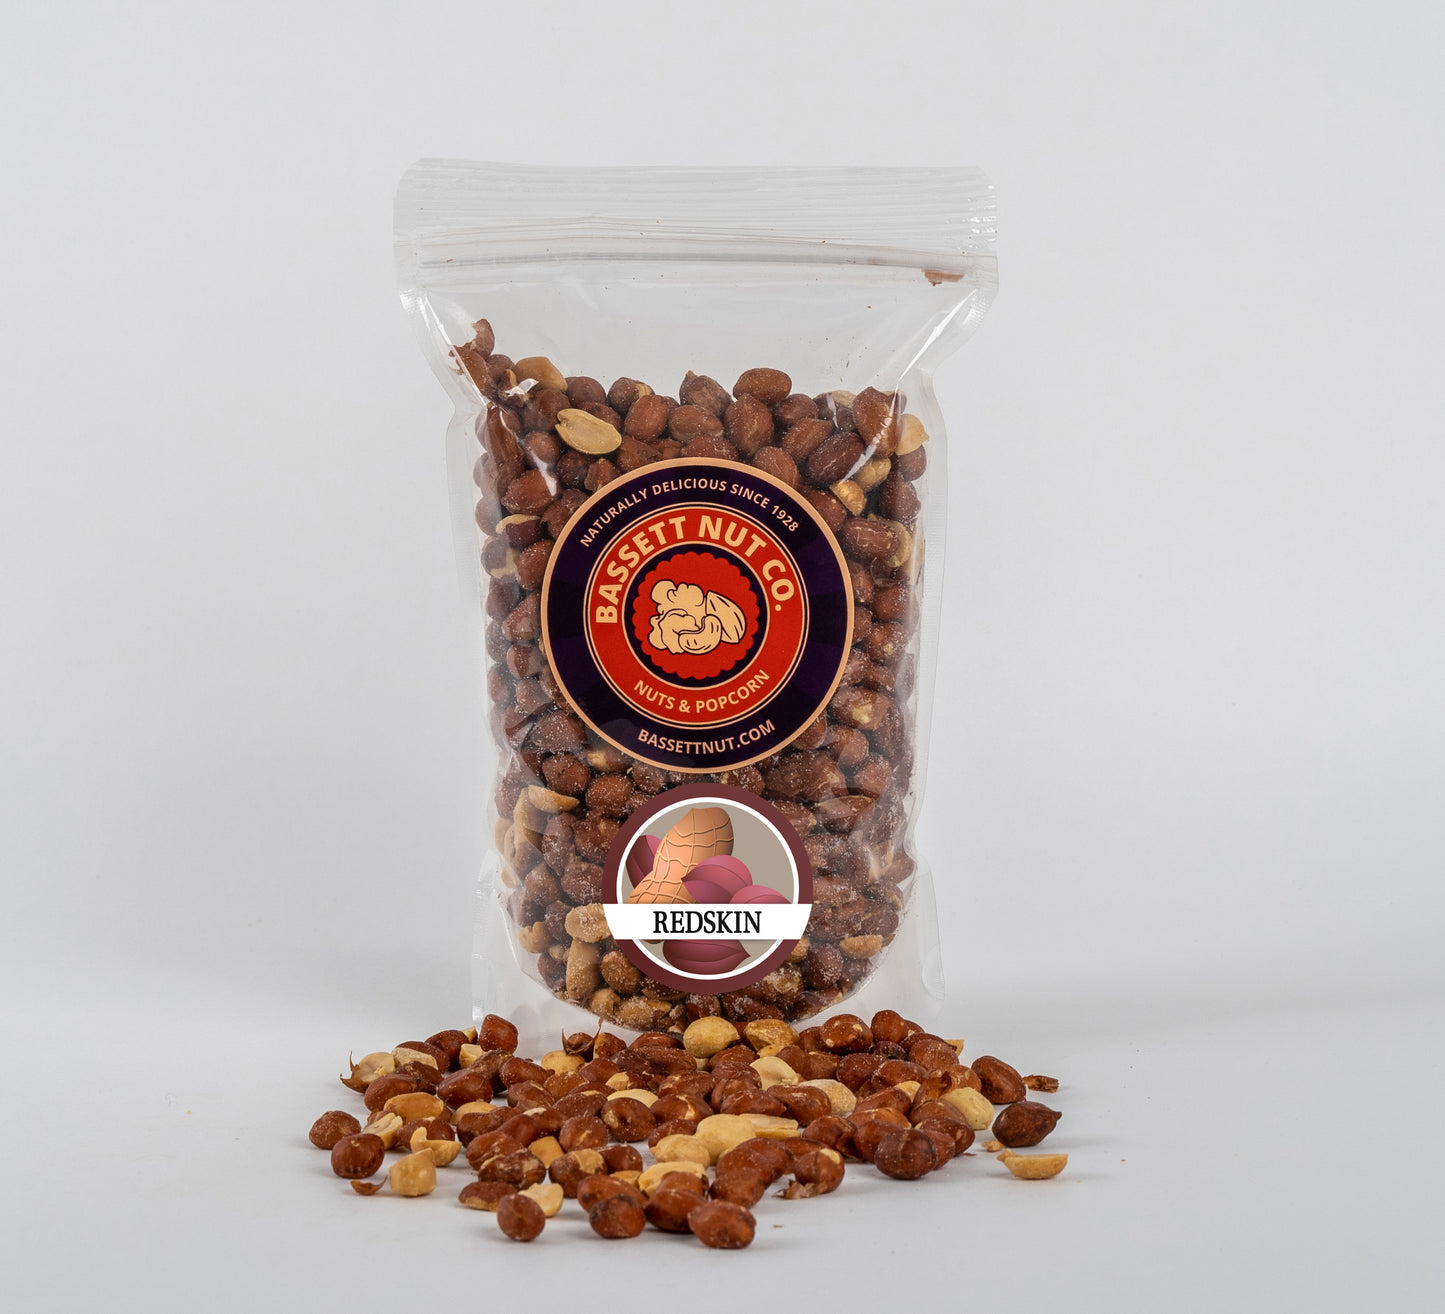 Savory Nut Box-Six 1 Pound Bags